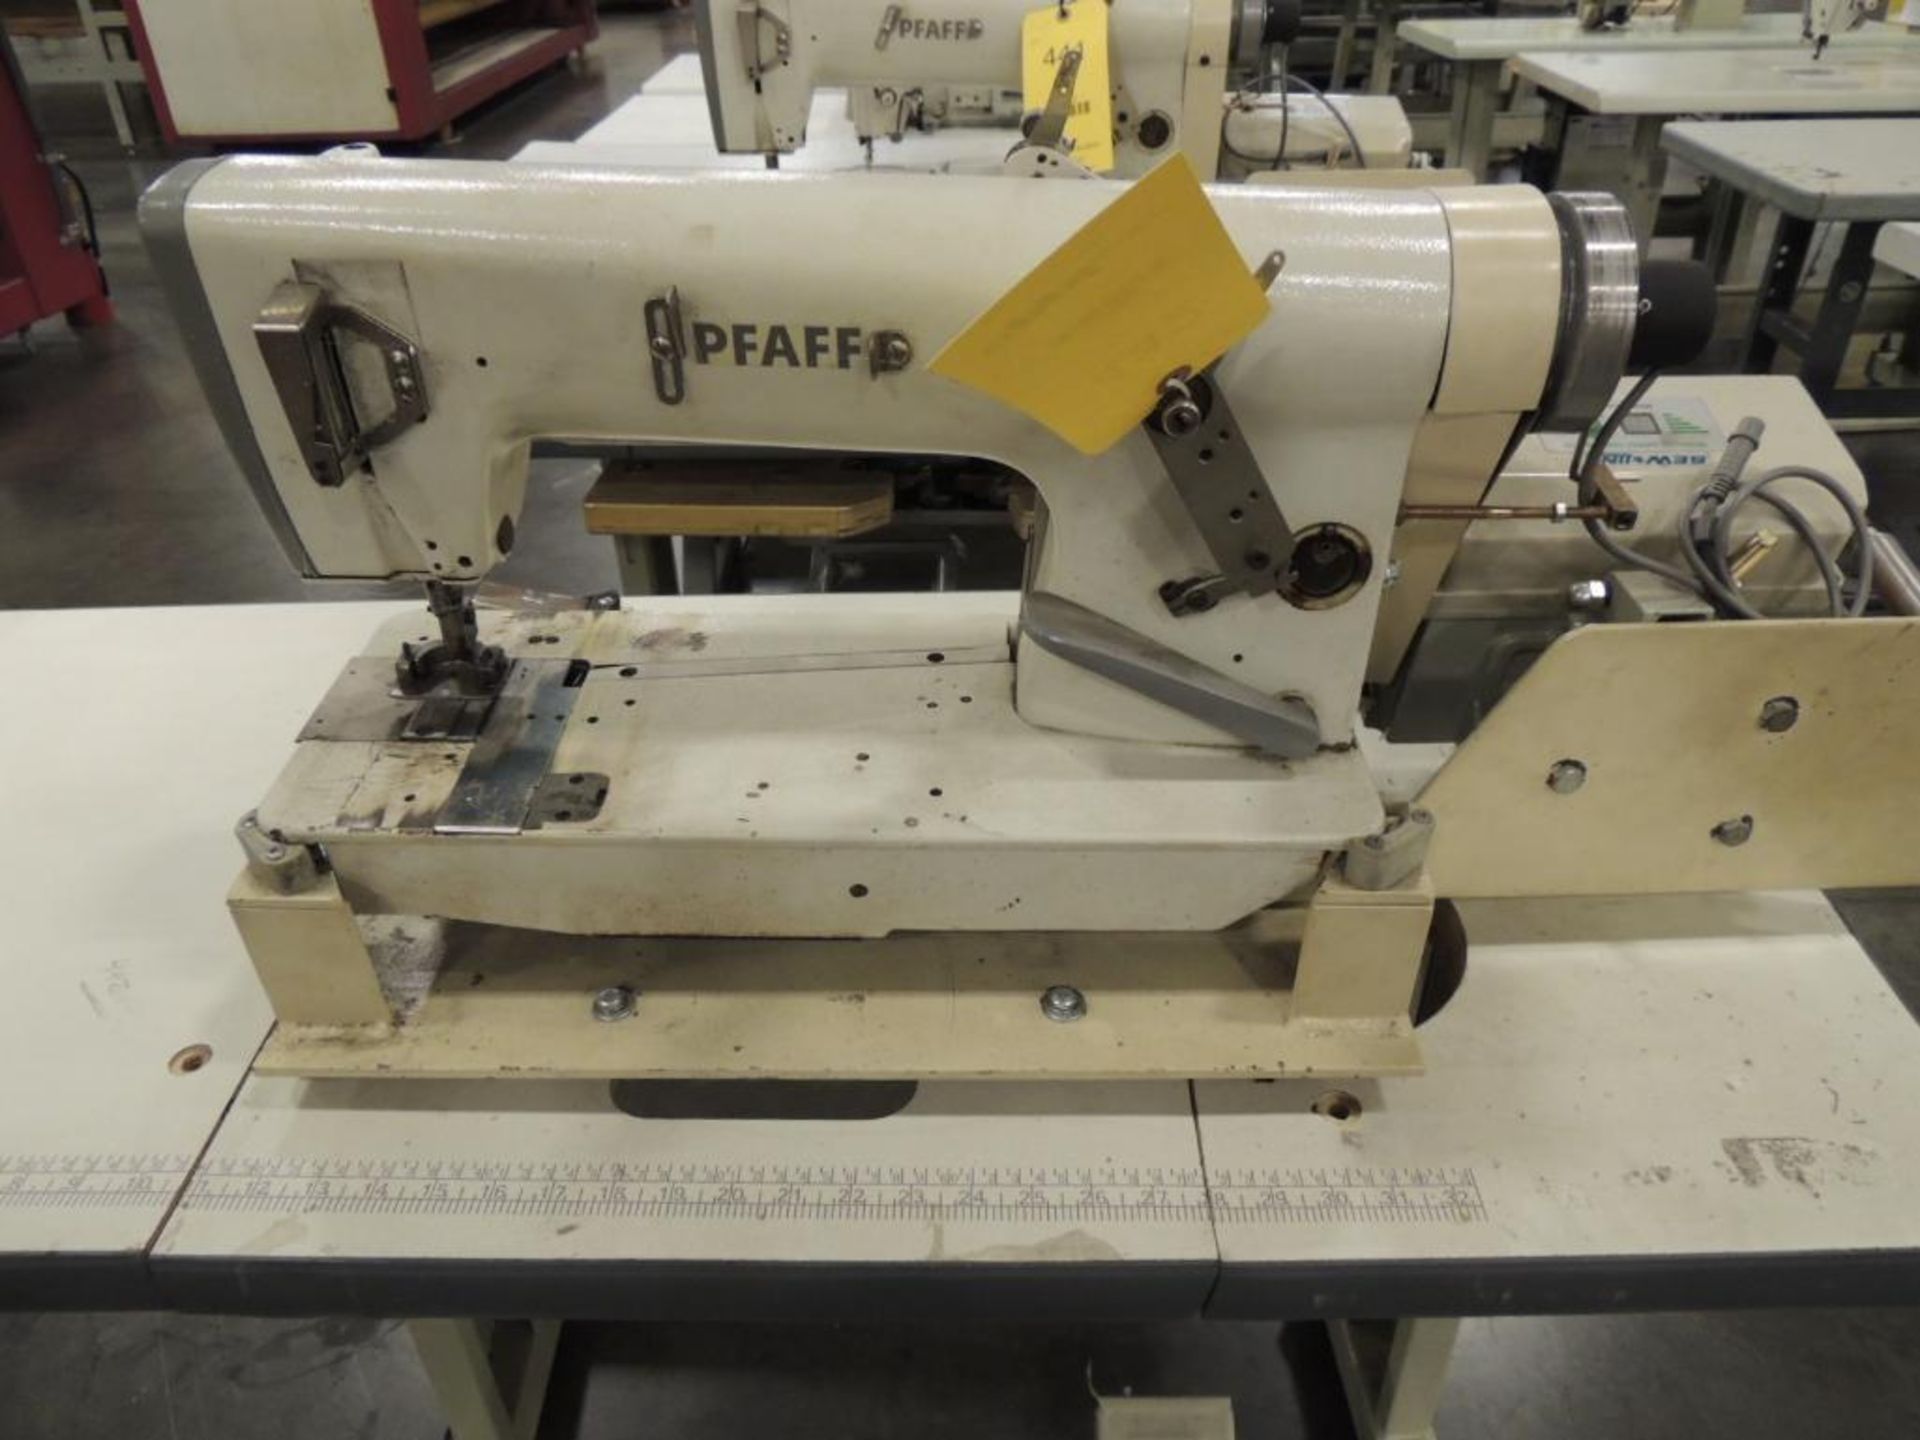 Pfaff KI5483 Sewing Machine, on Table